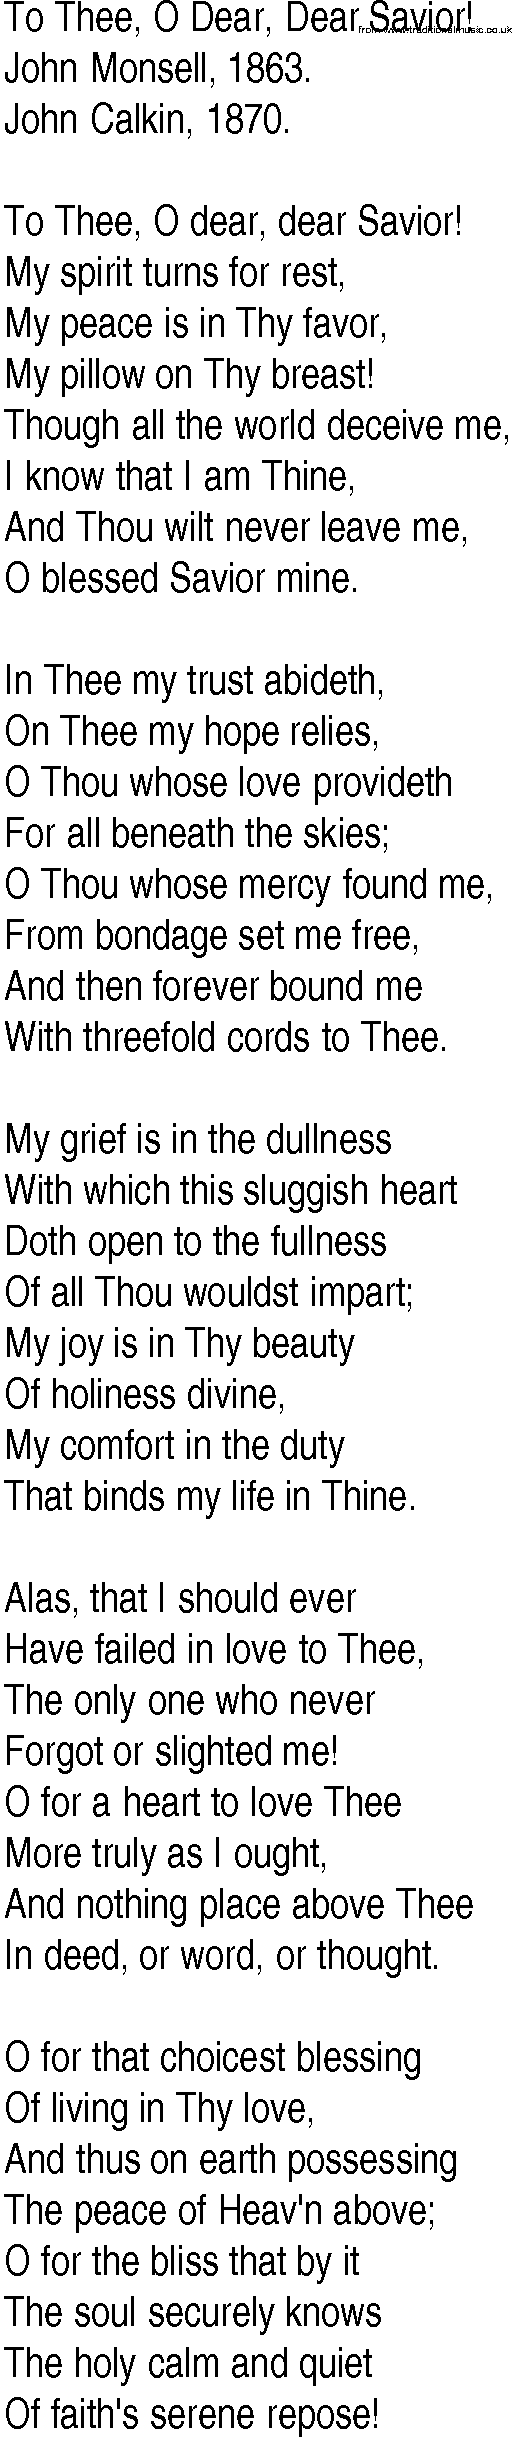 Hymn and Gospel Song: To Thee, O Dear, Dear Savior! by John Monsell lyrics